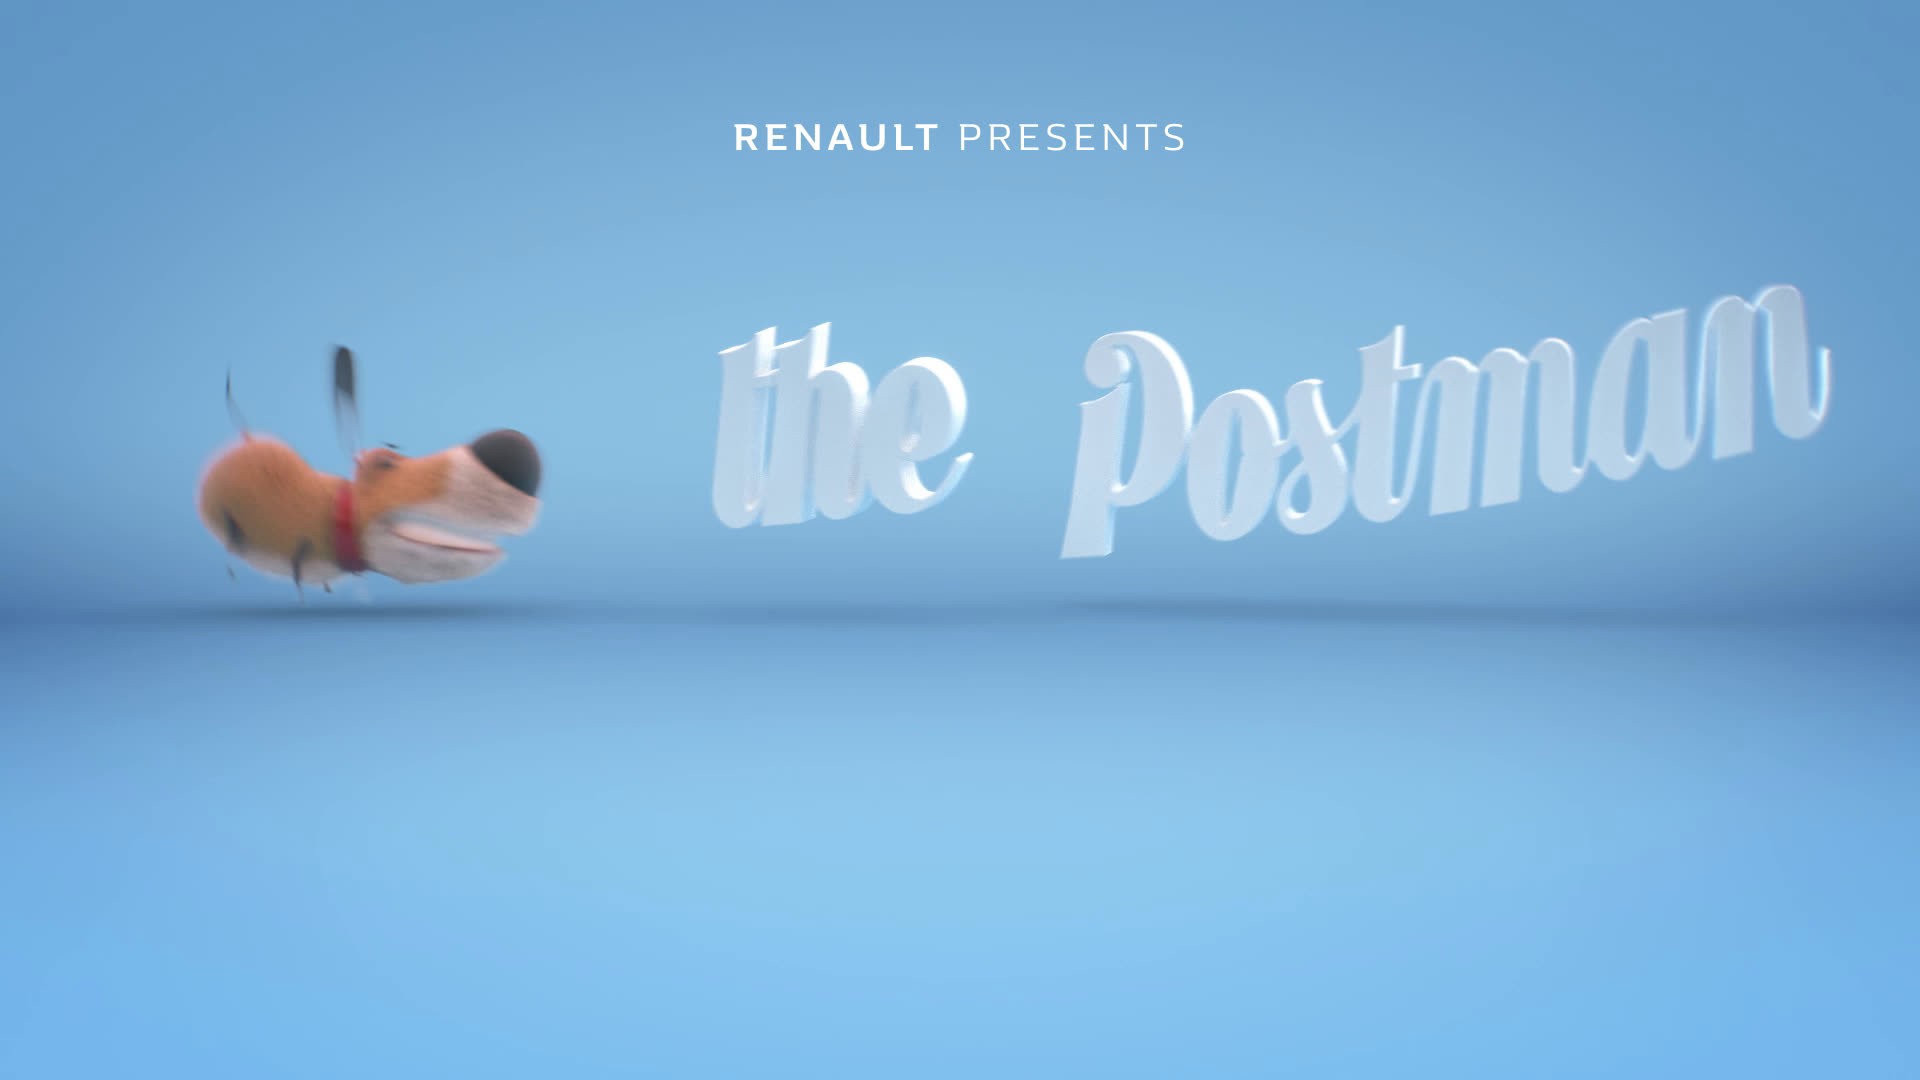 The postman